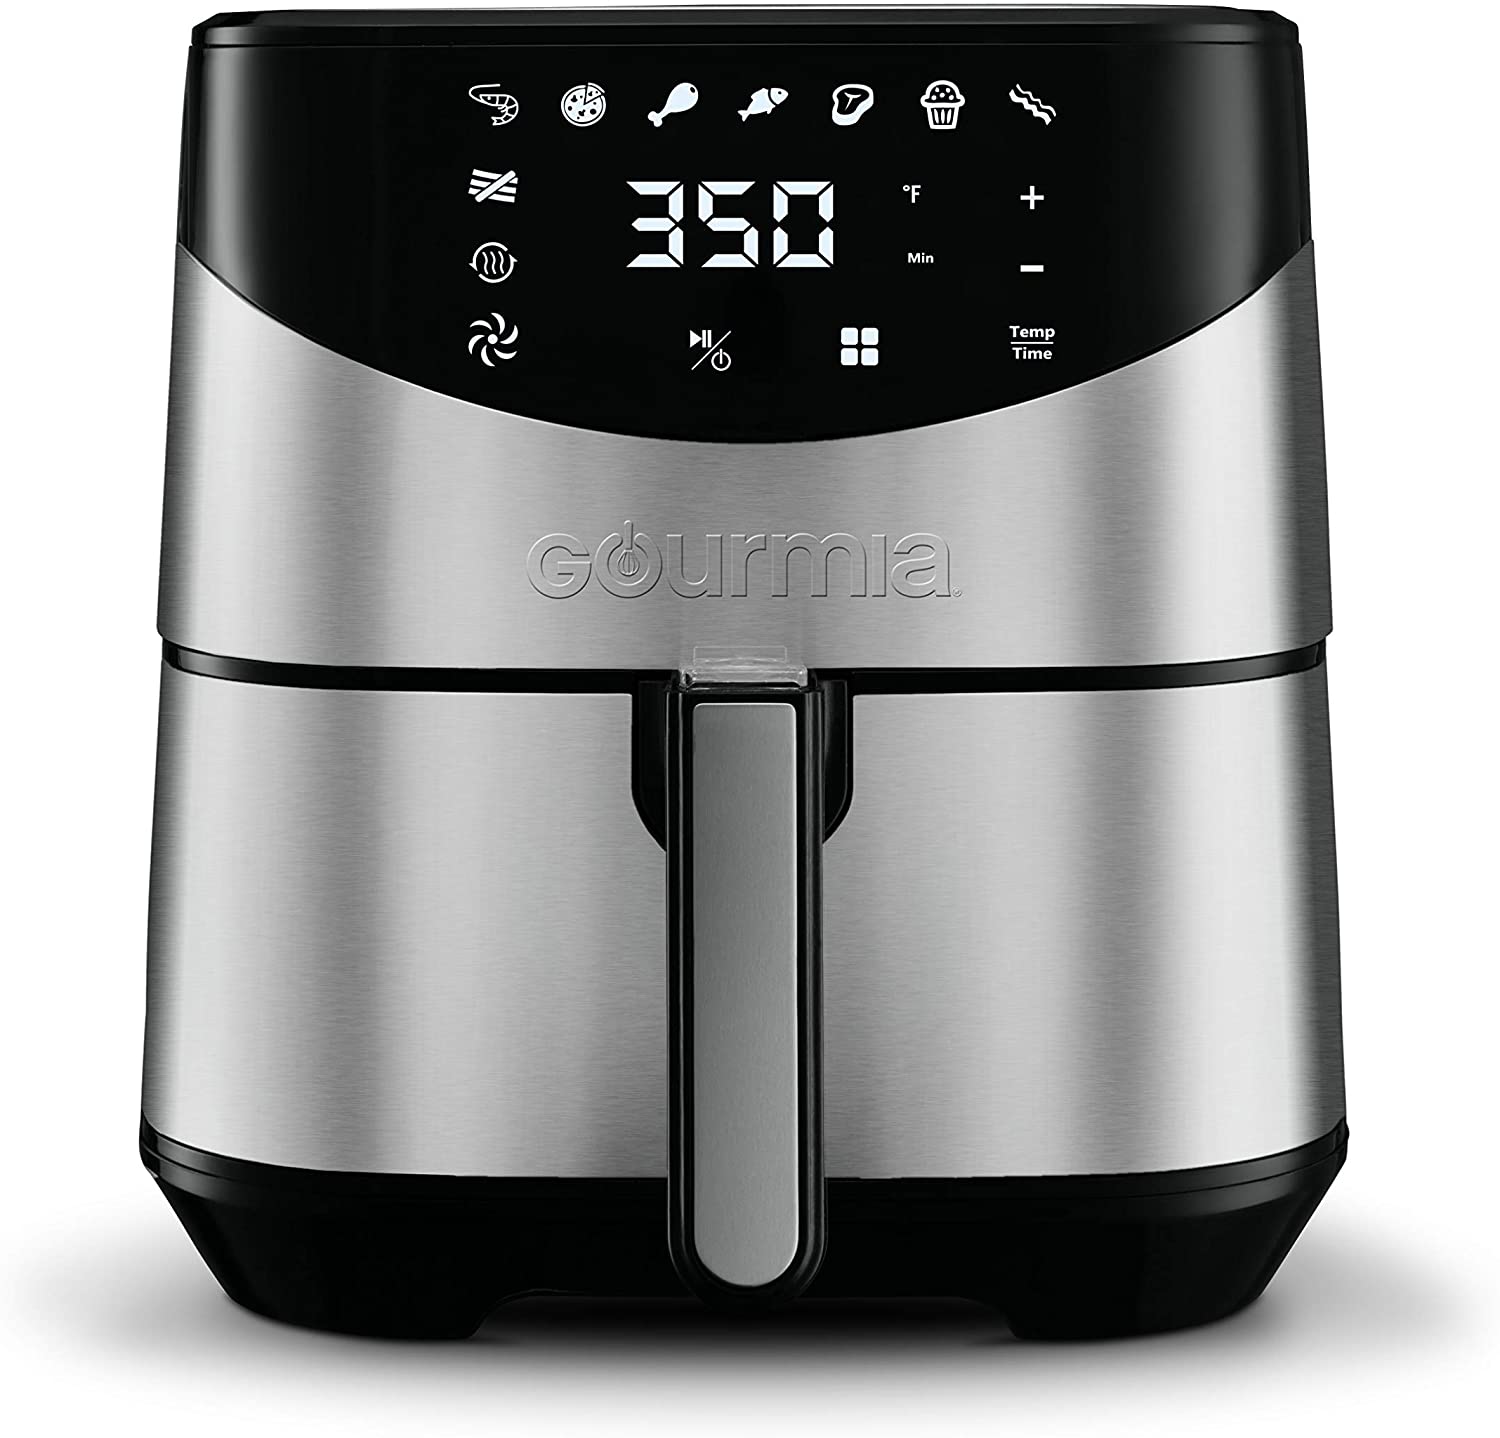 Gourmia 6-Slice Digital Air Fryer Oven with 19 Presets - GTF2448 